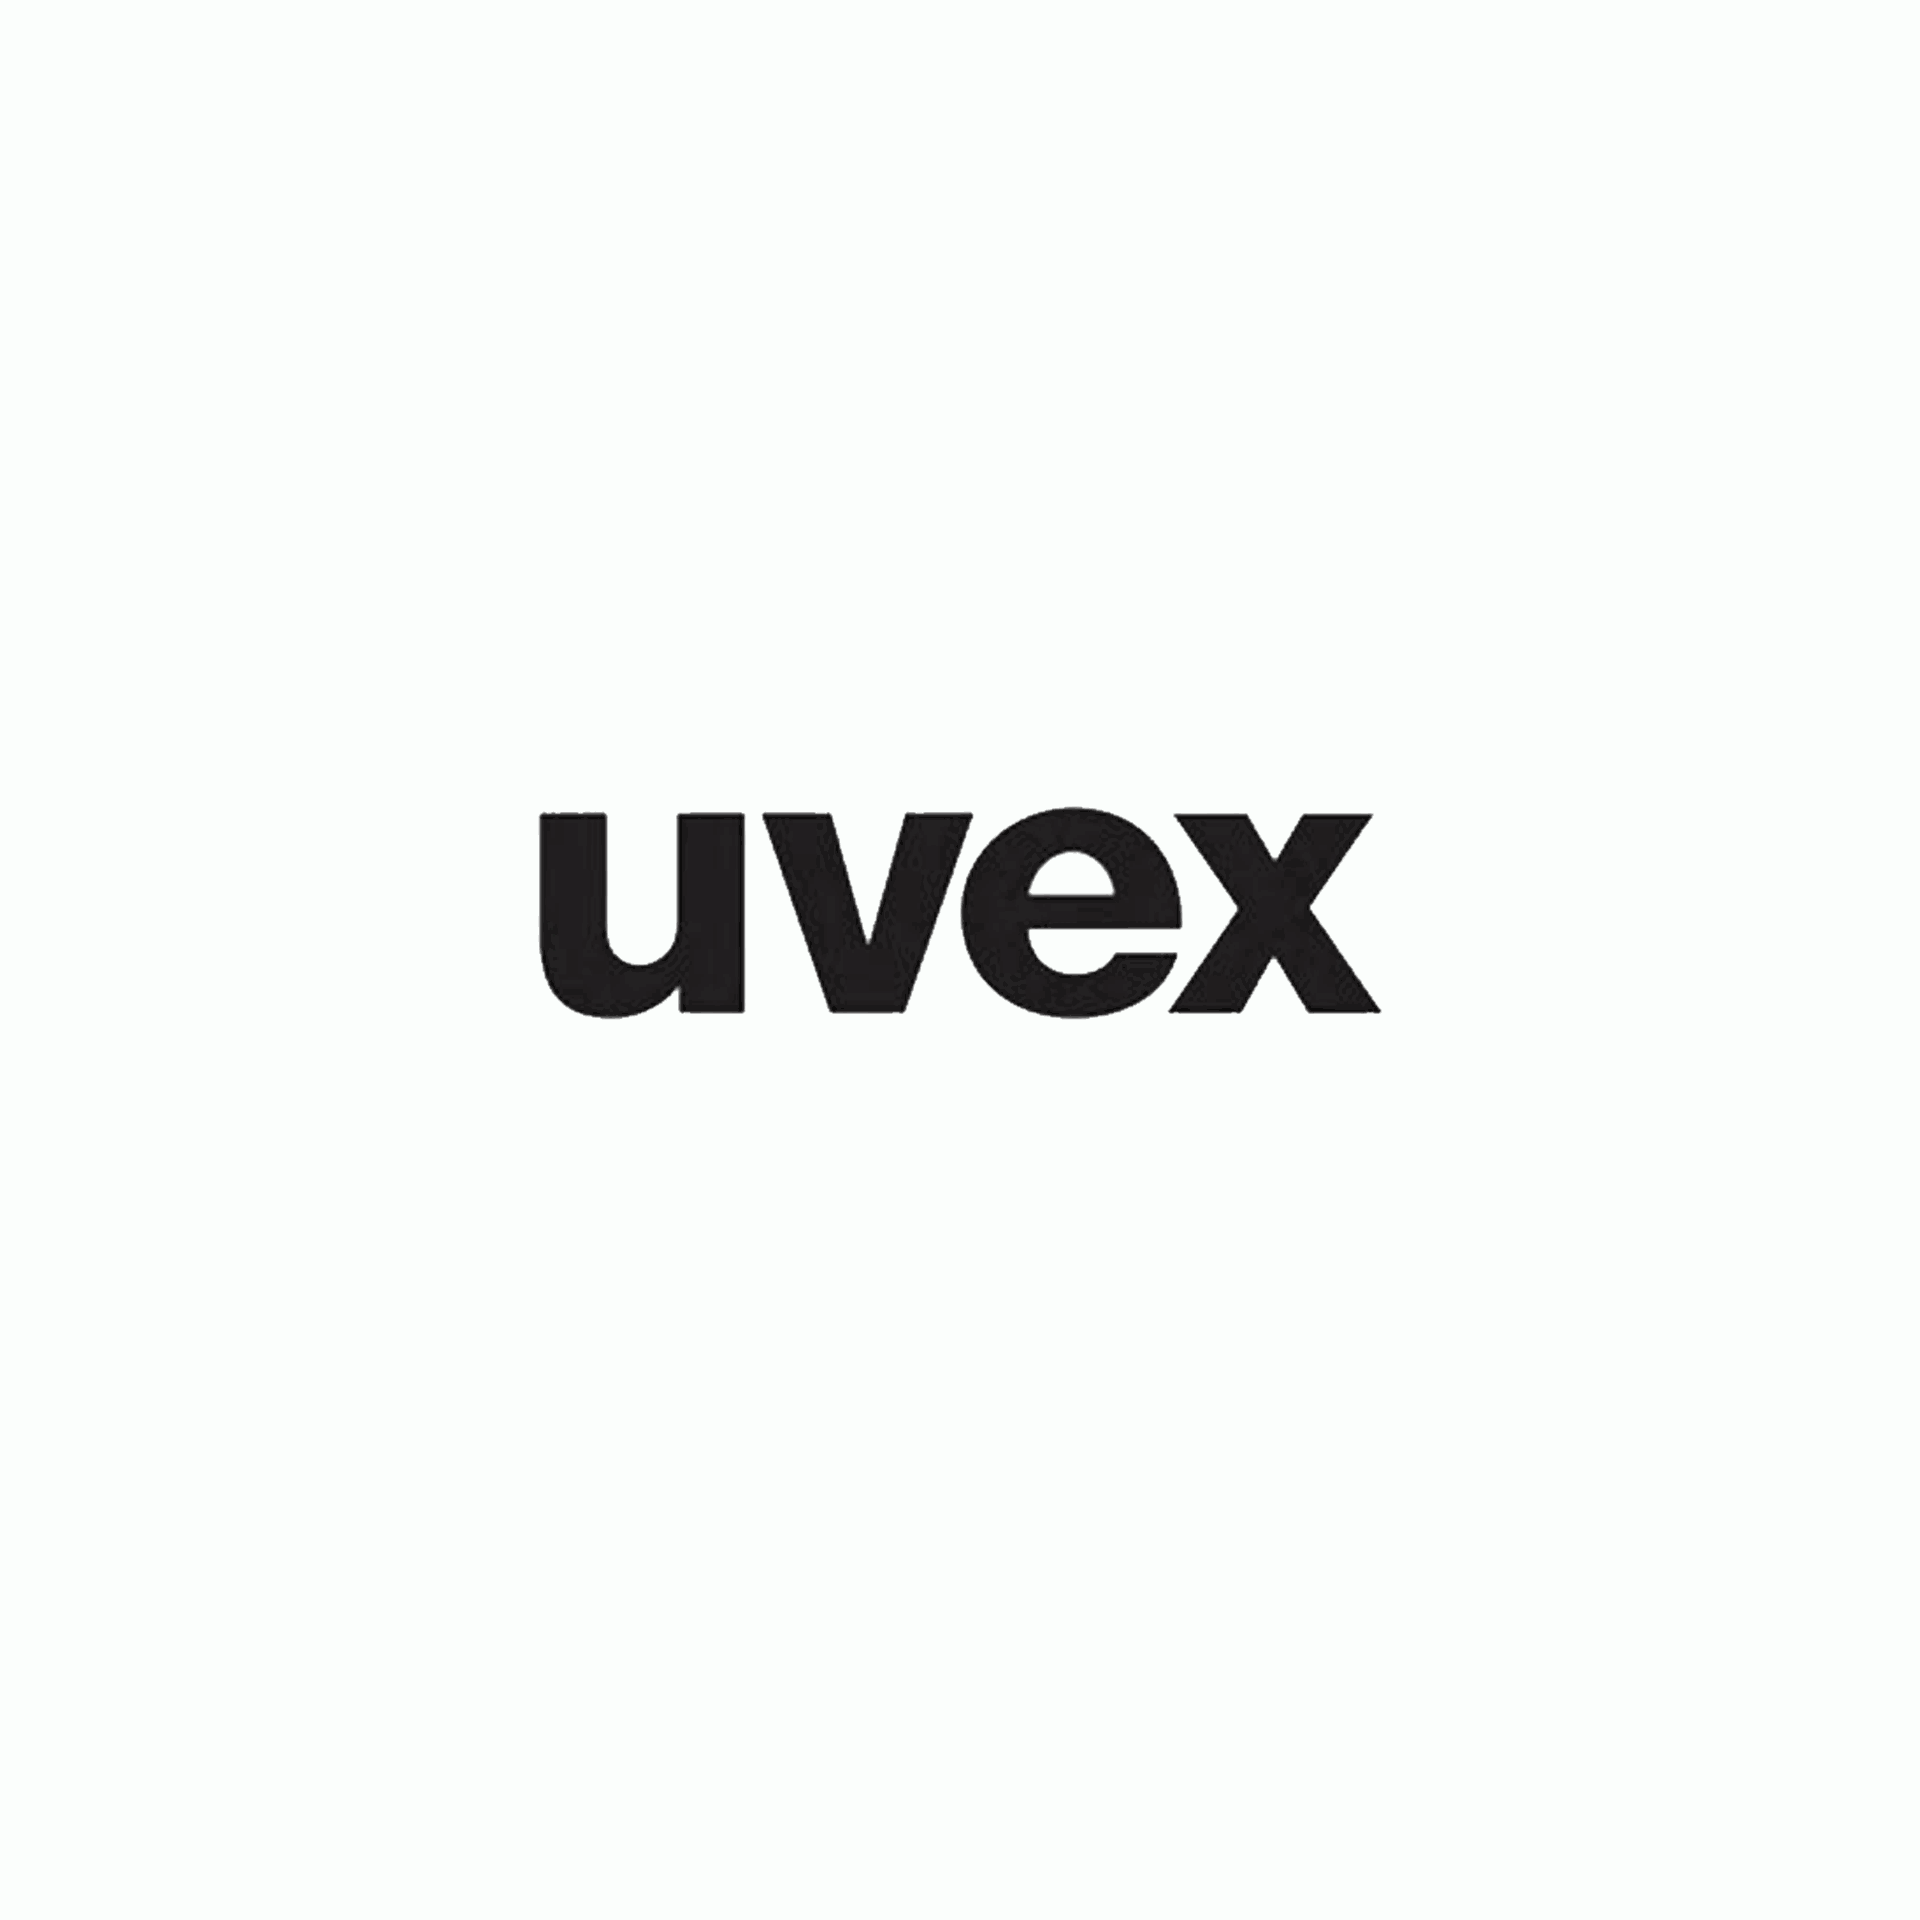 Product Brand: uvex